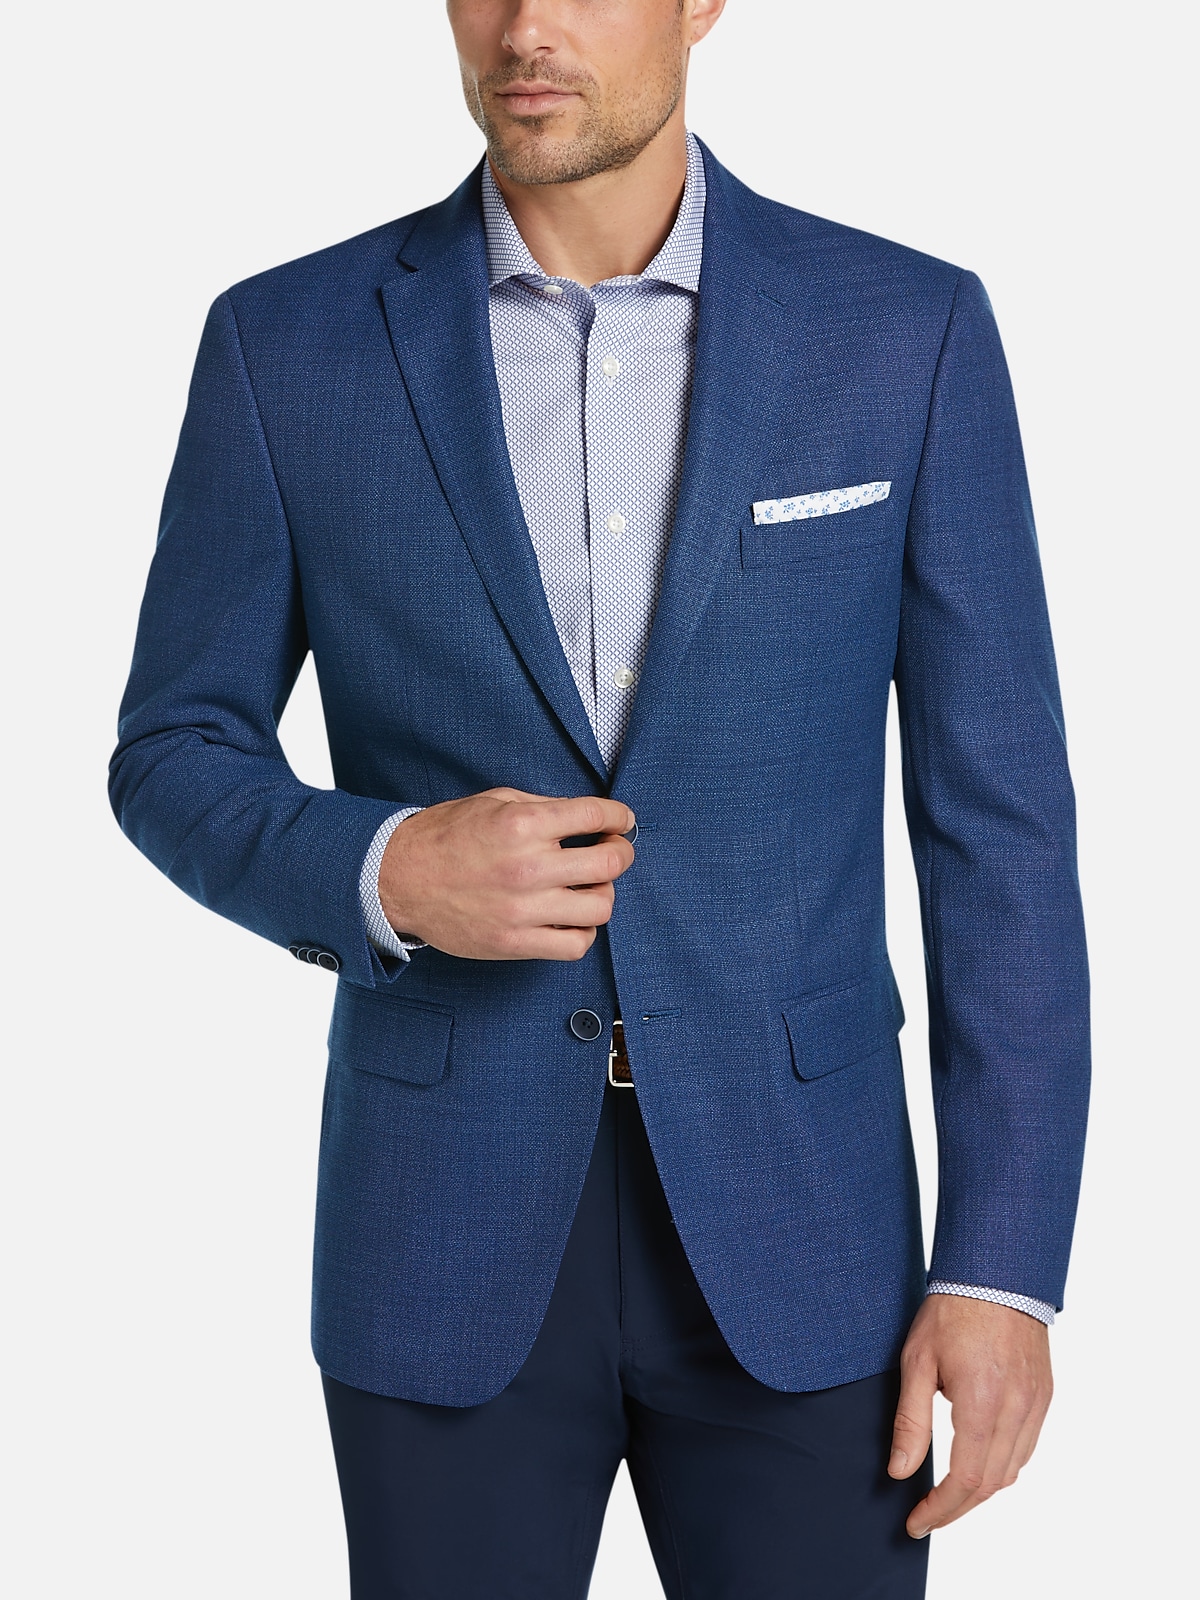 Tommy Hilfiger Men's Blue Sport Coats & Blazers